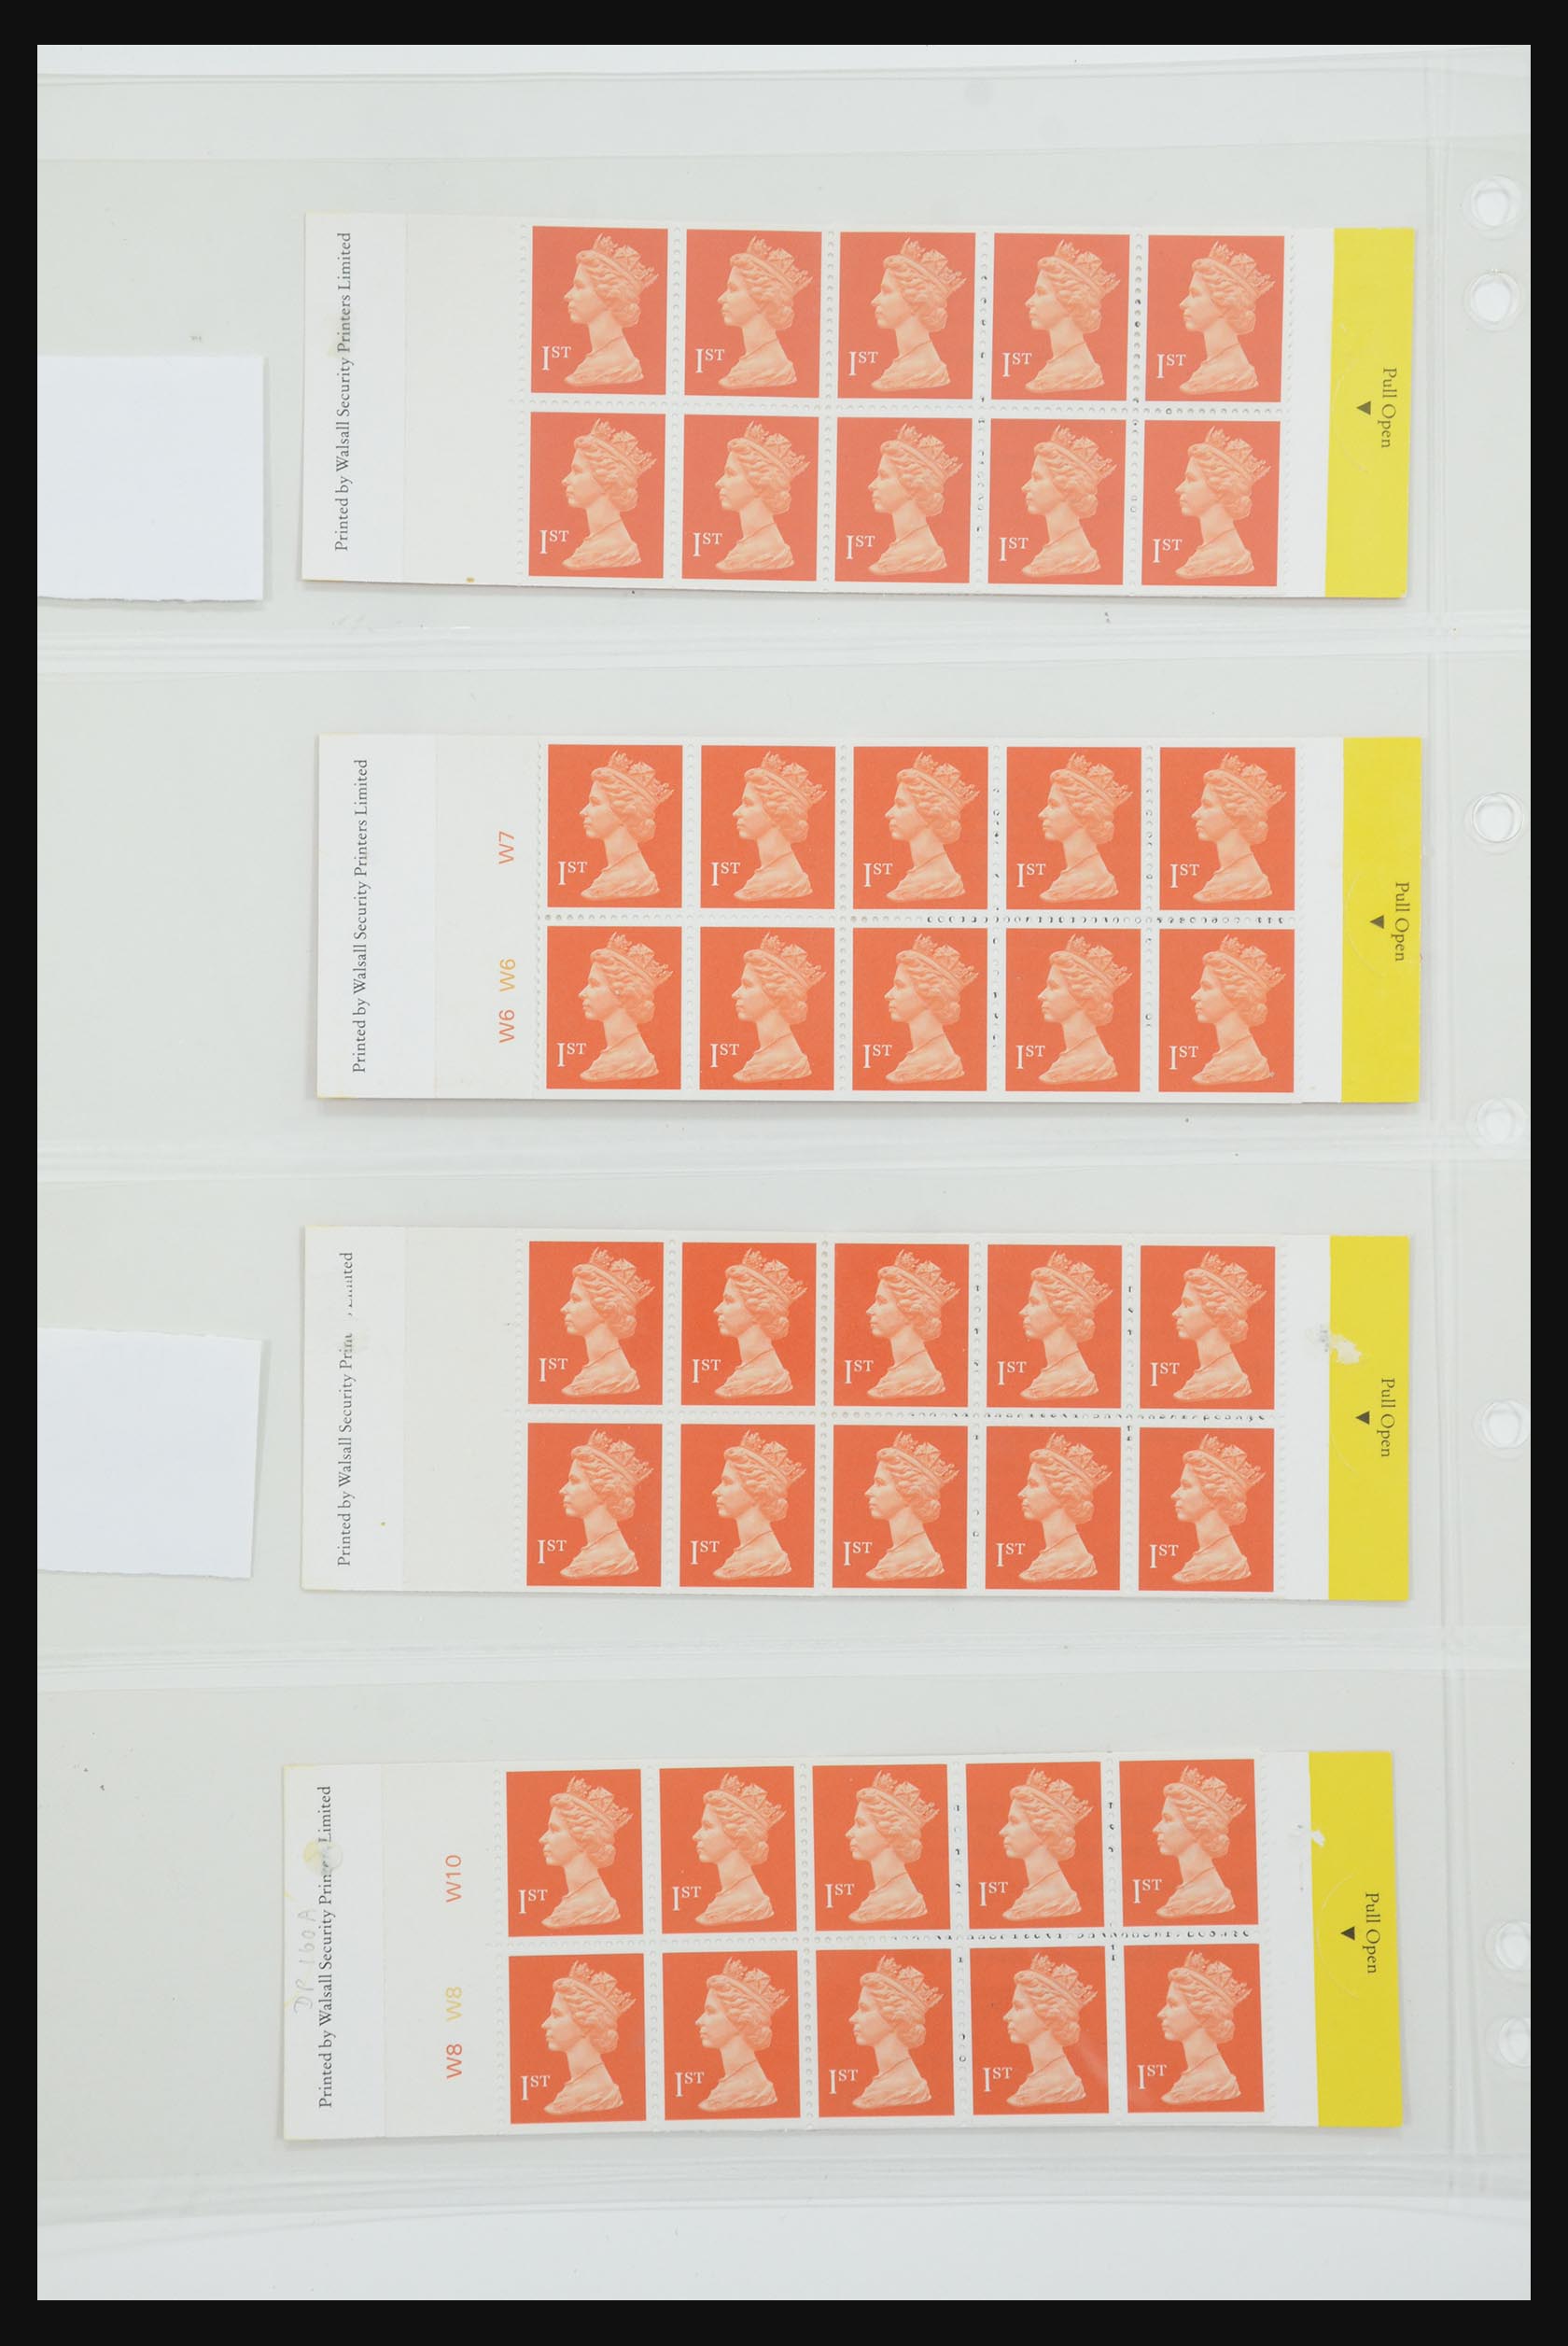 31959 098 - 31959 Great Britain stampbooklets 1987-2016!!